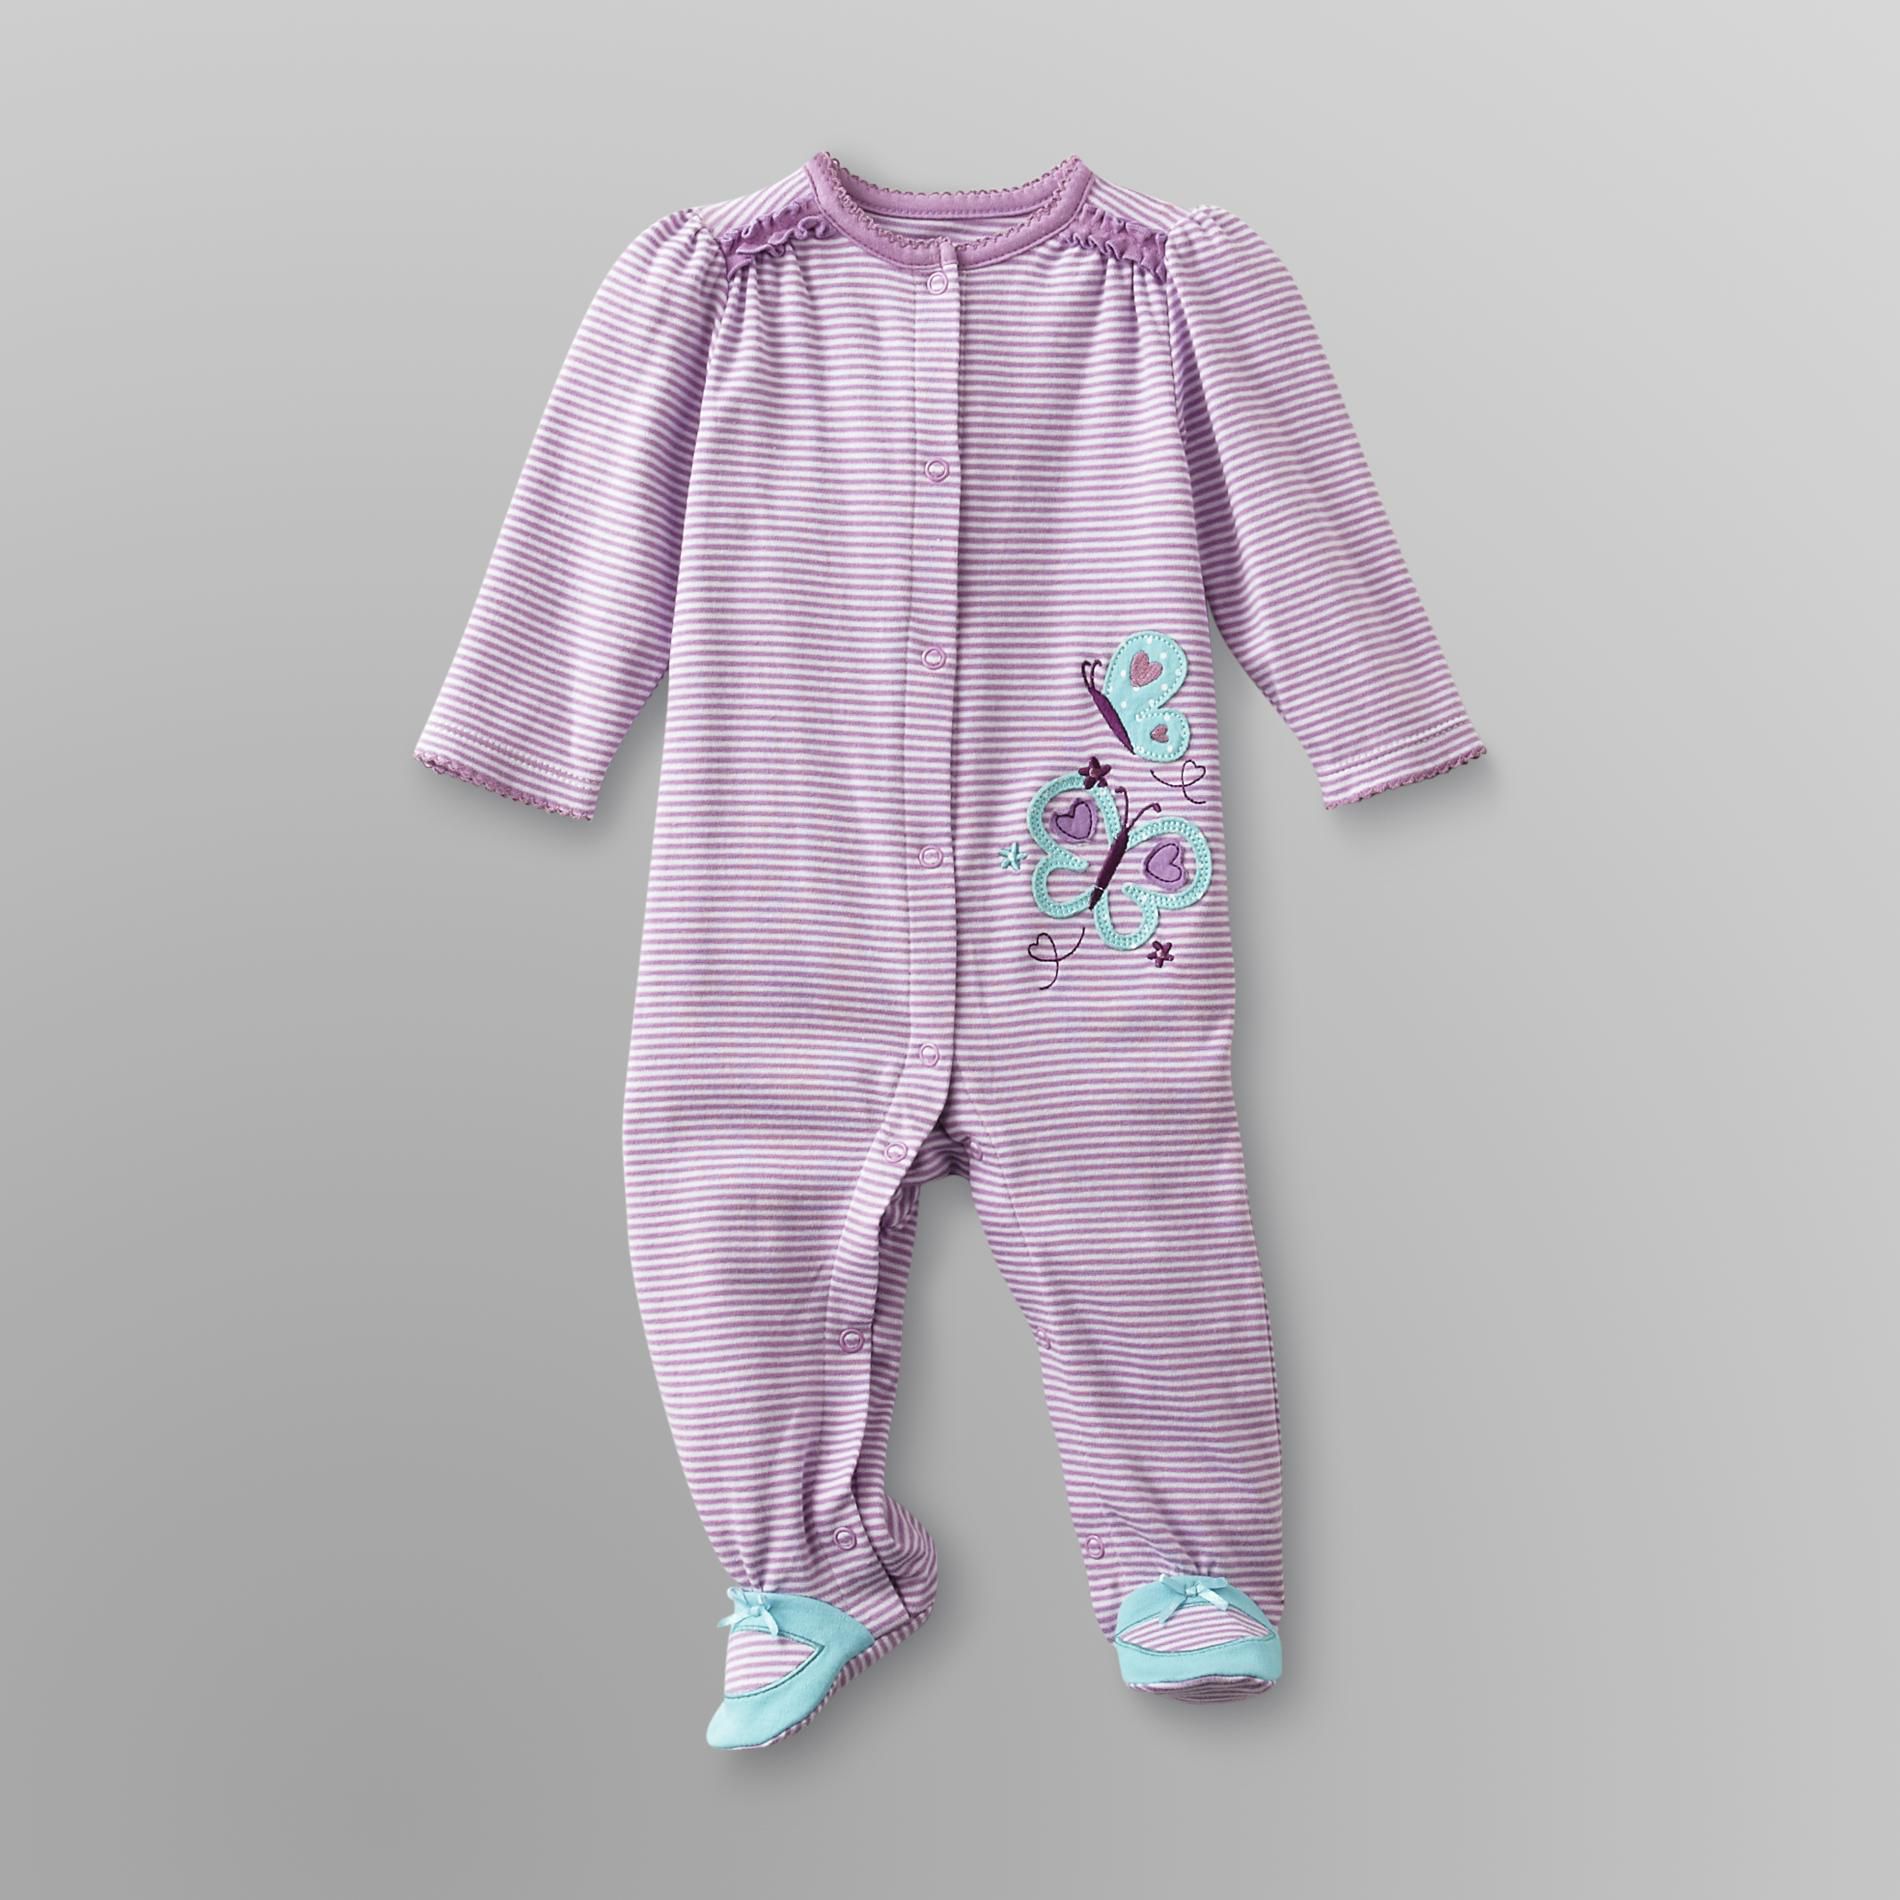 Little Wonders Infant Girl's Sleeper Pajamas